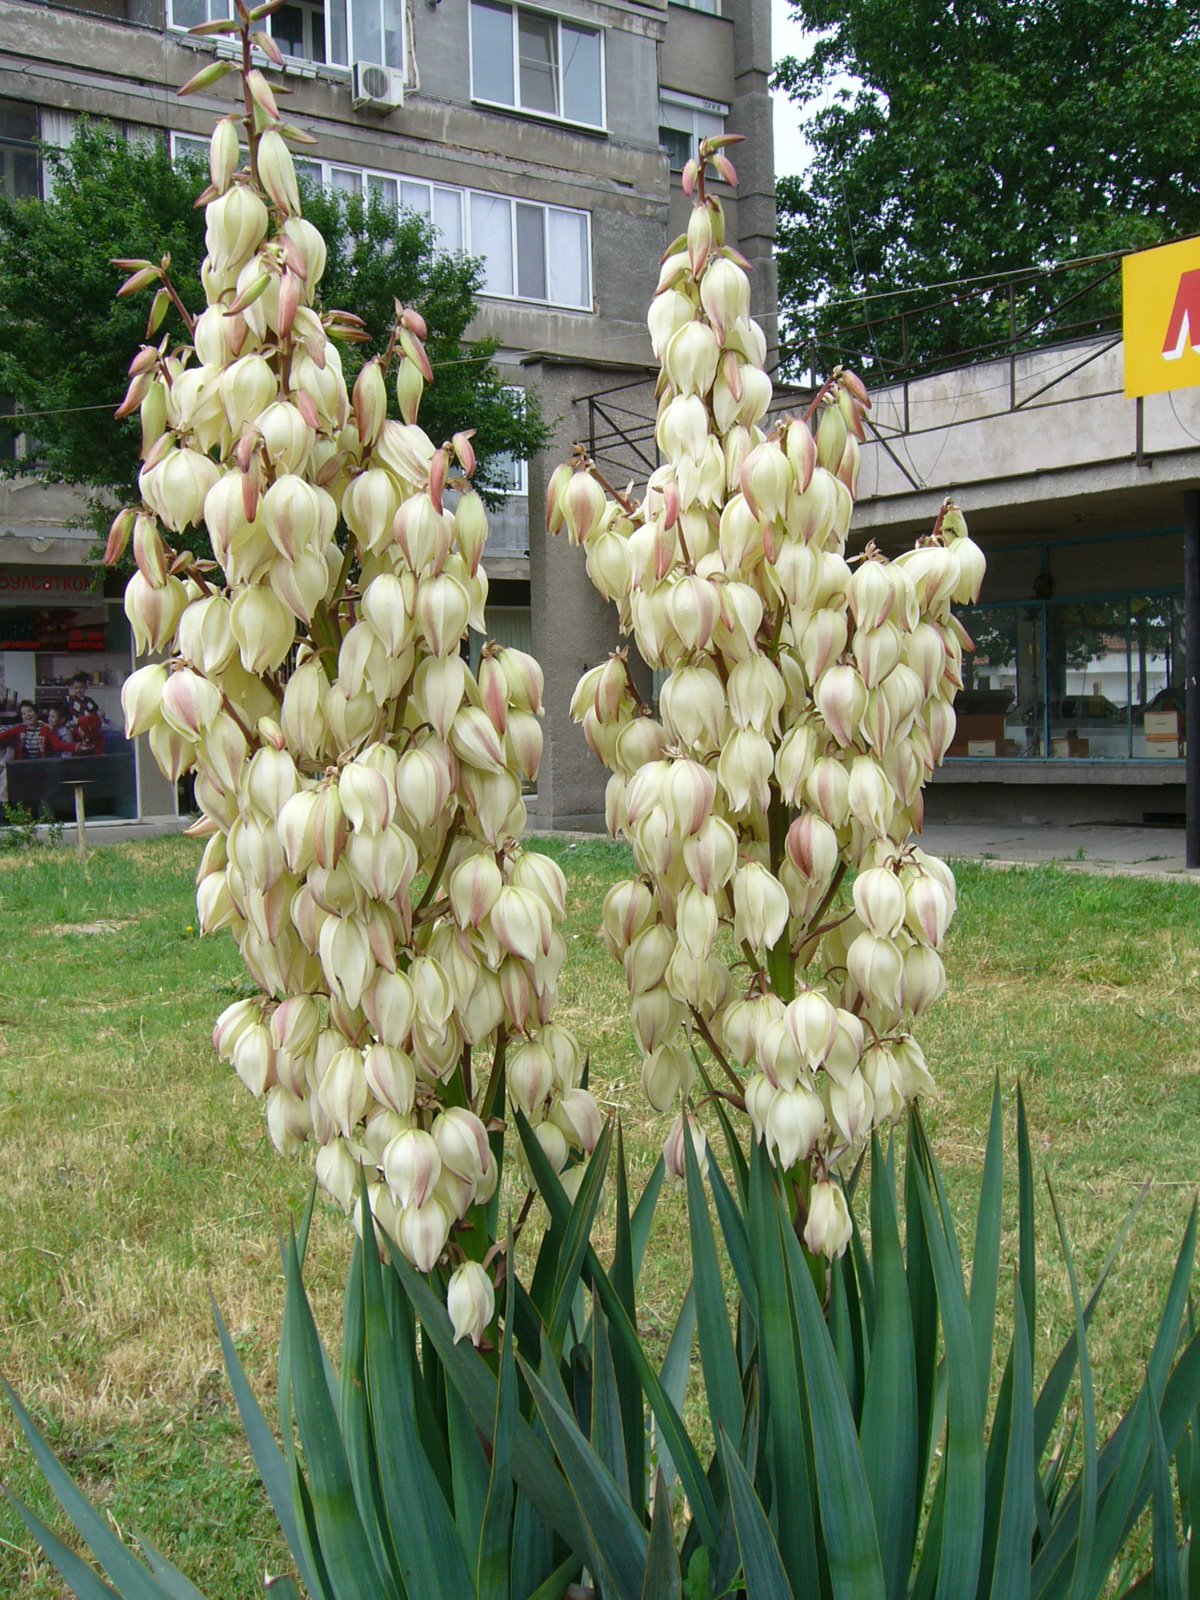 Giant Flowers